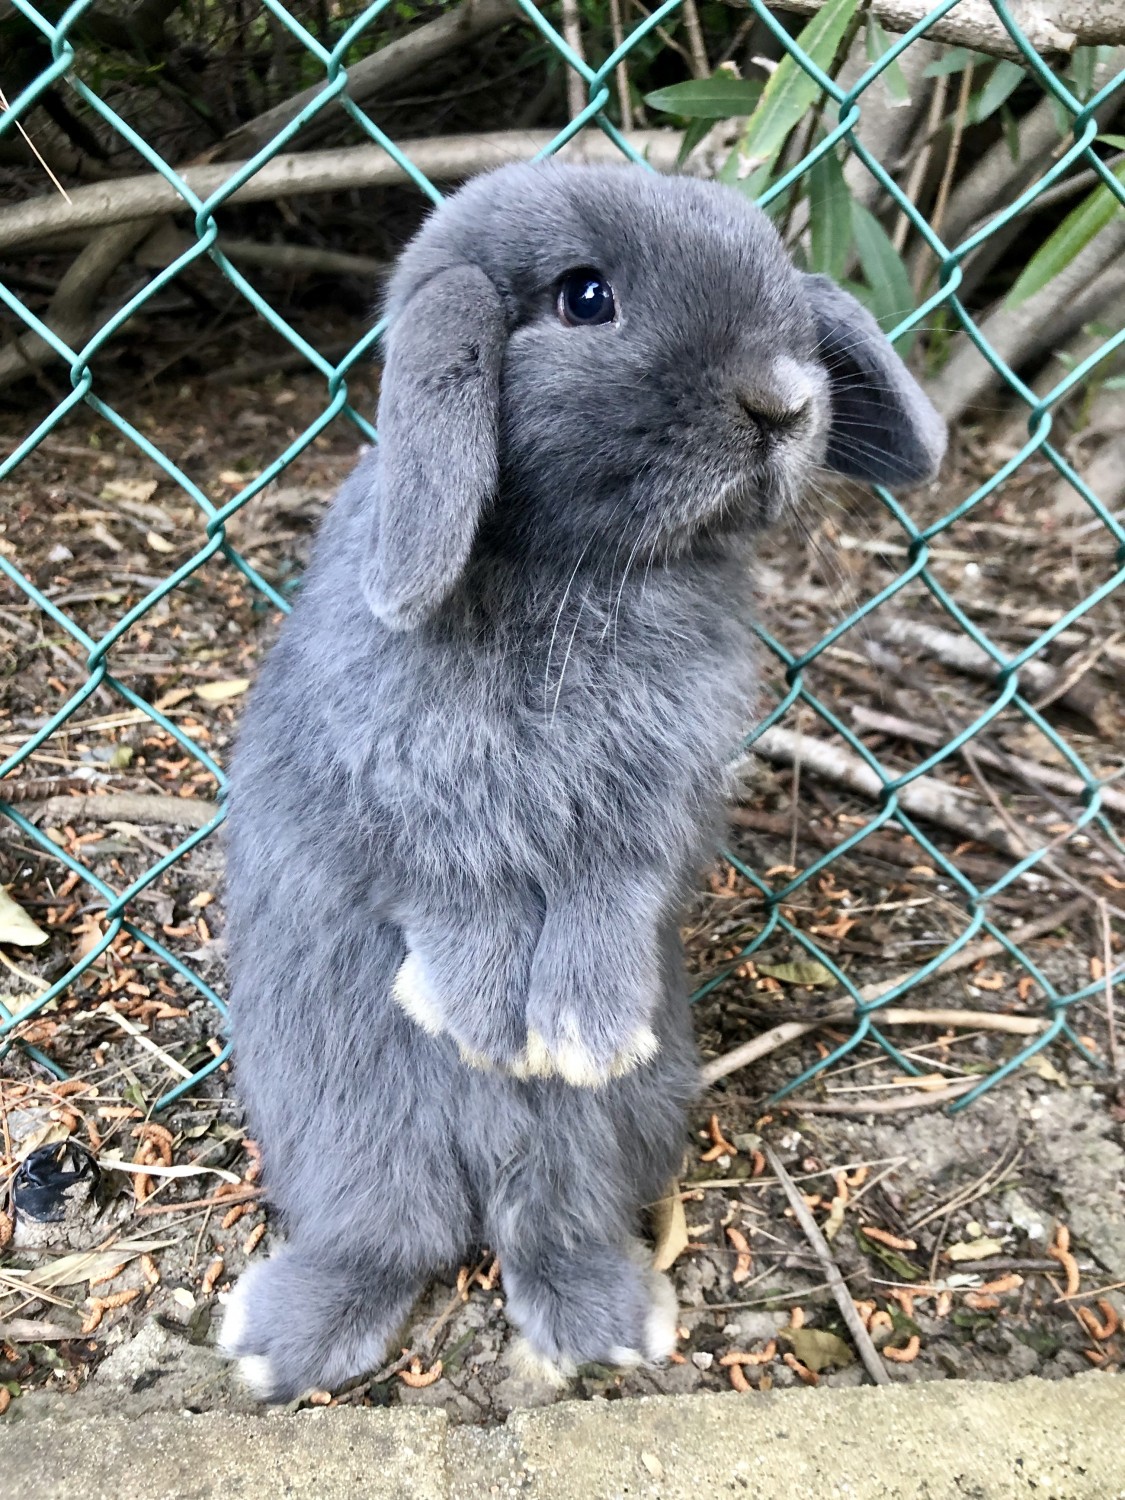 blue holland lop bunny